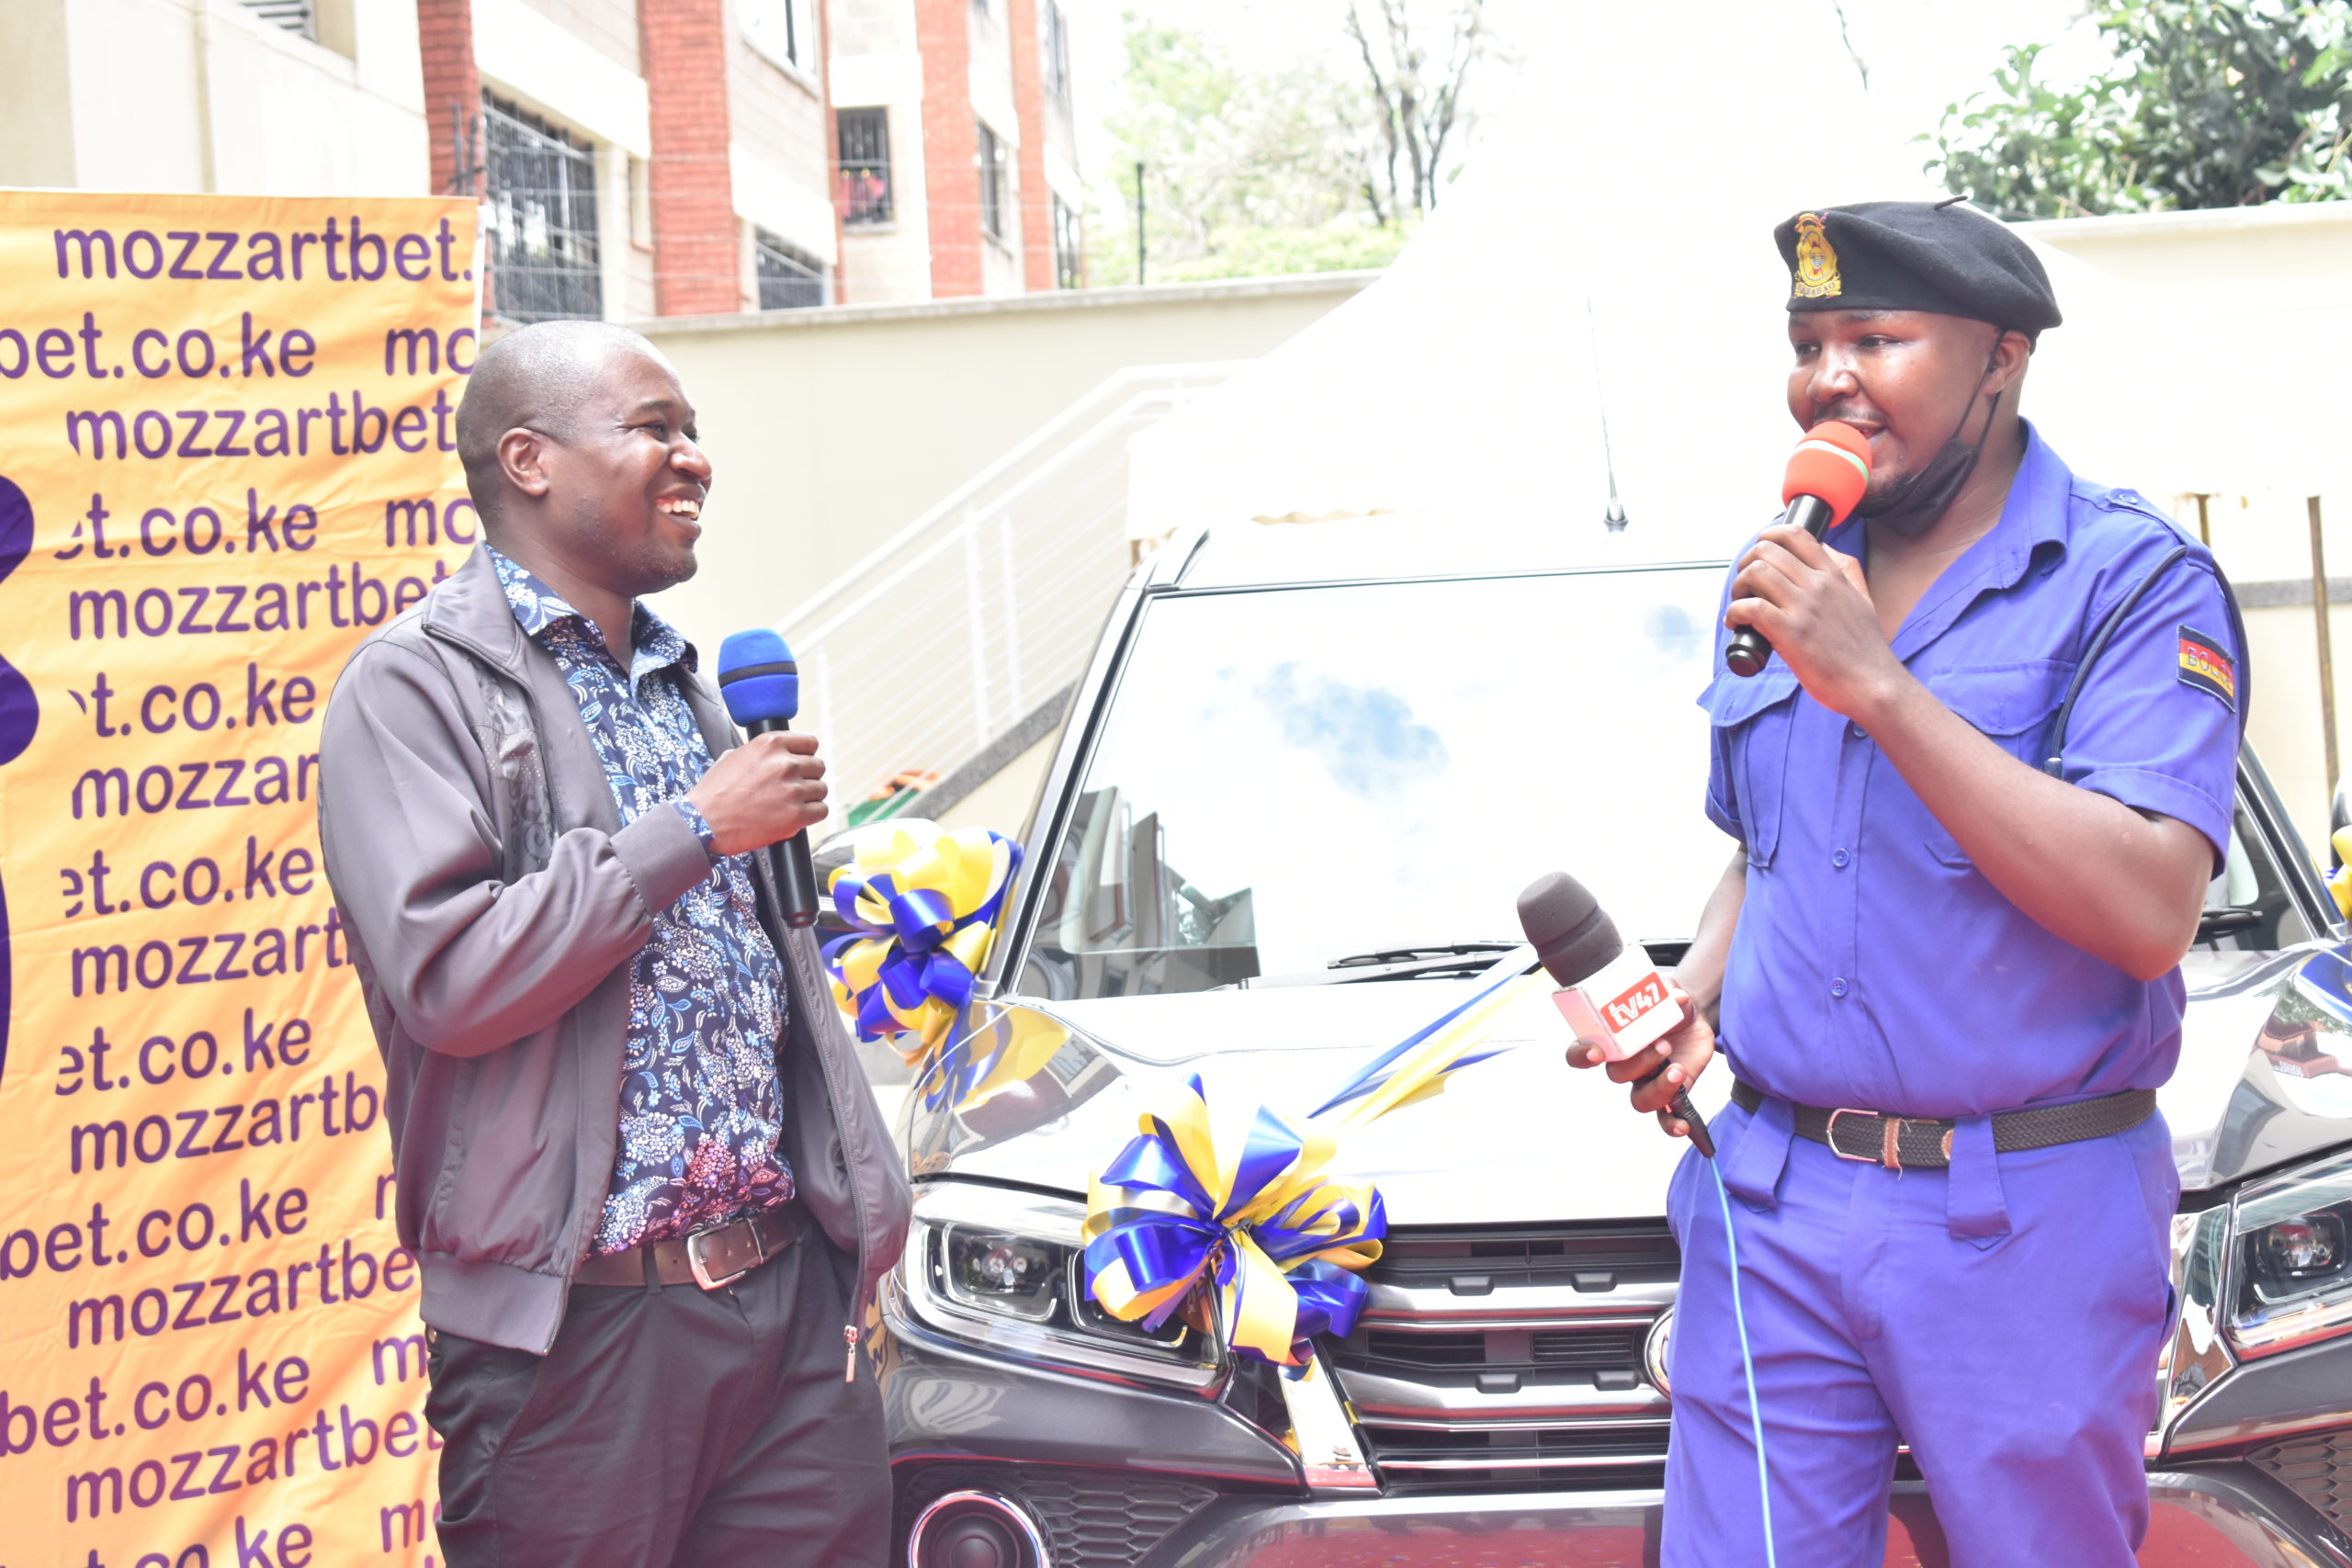 Despite a walking name, Natembeya refuses to walk as he wins Urban Cruiser SUV with Mozzart Bet!